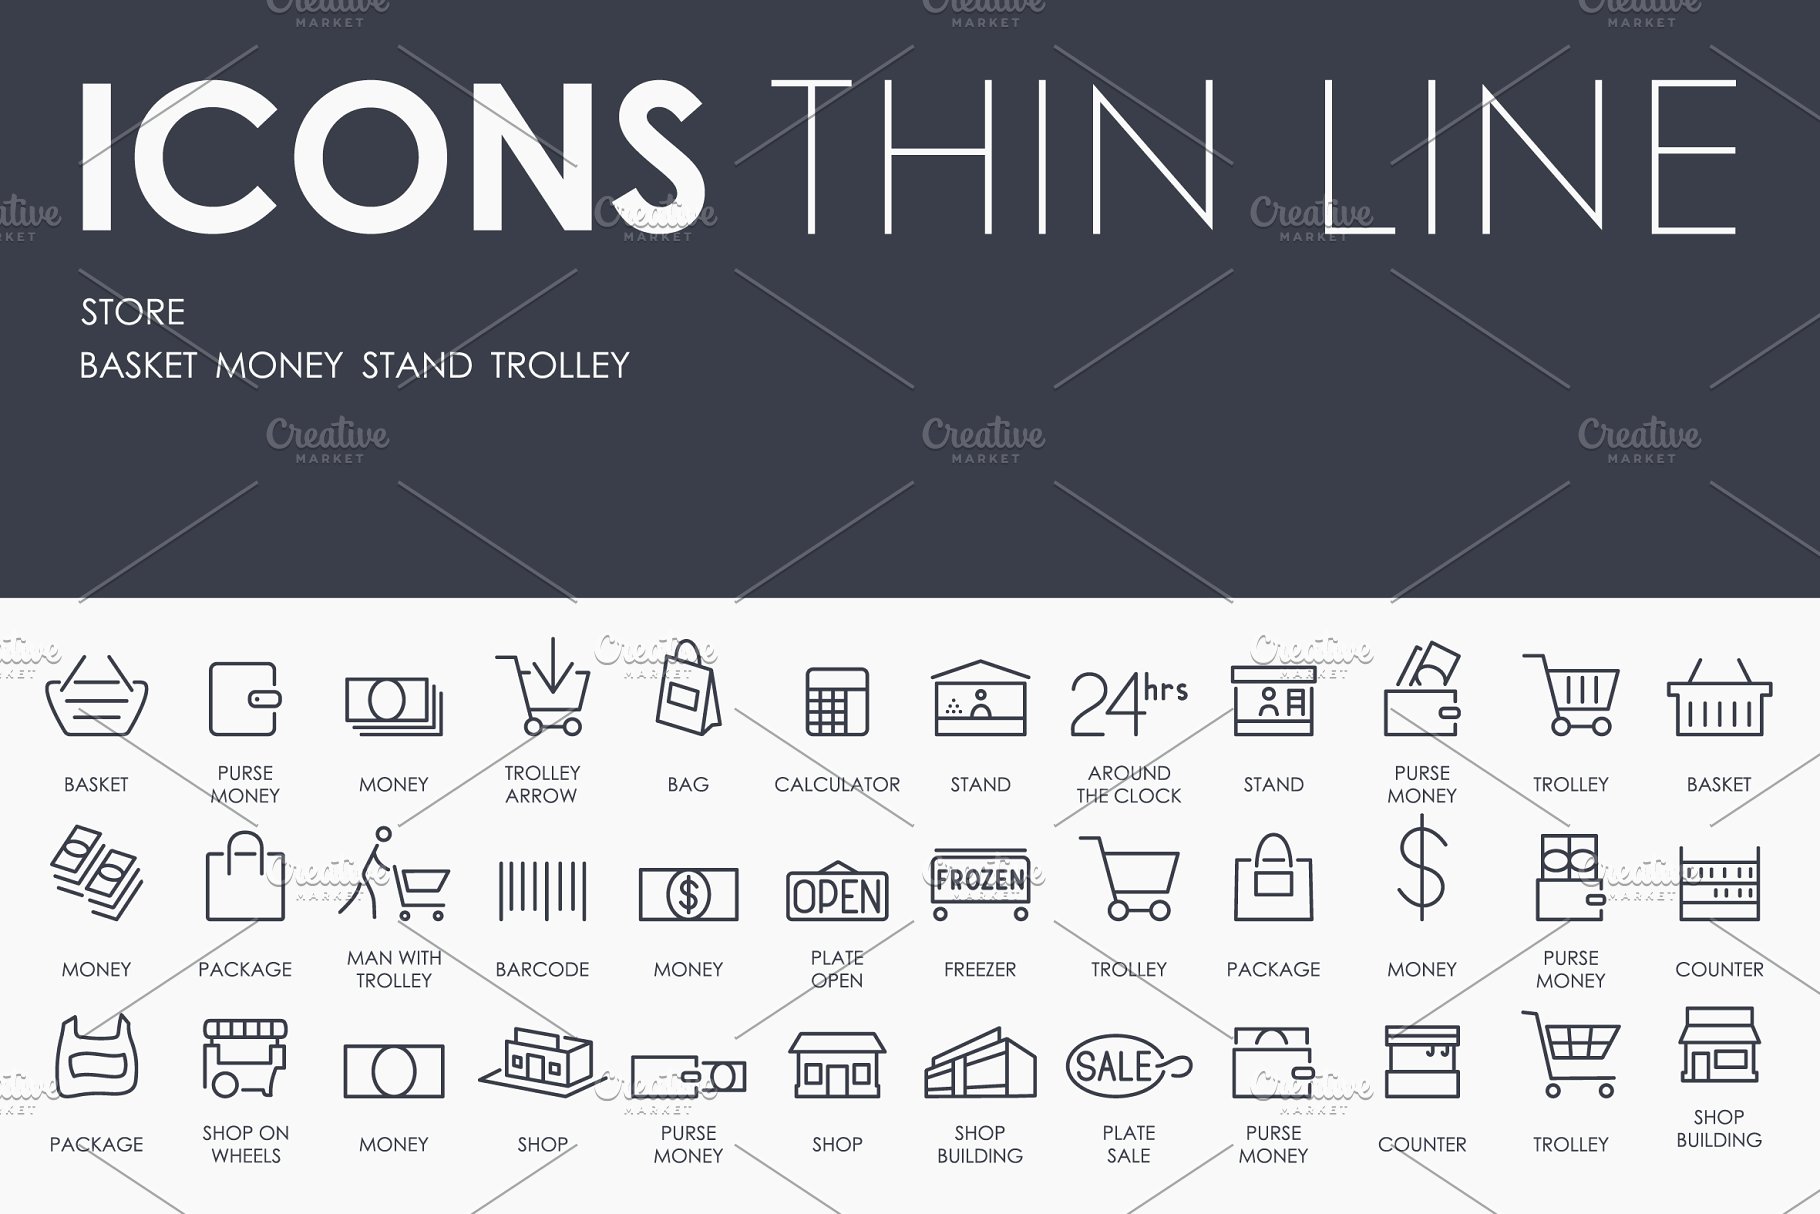 电商矢量图标素材 Store thinline icons